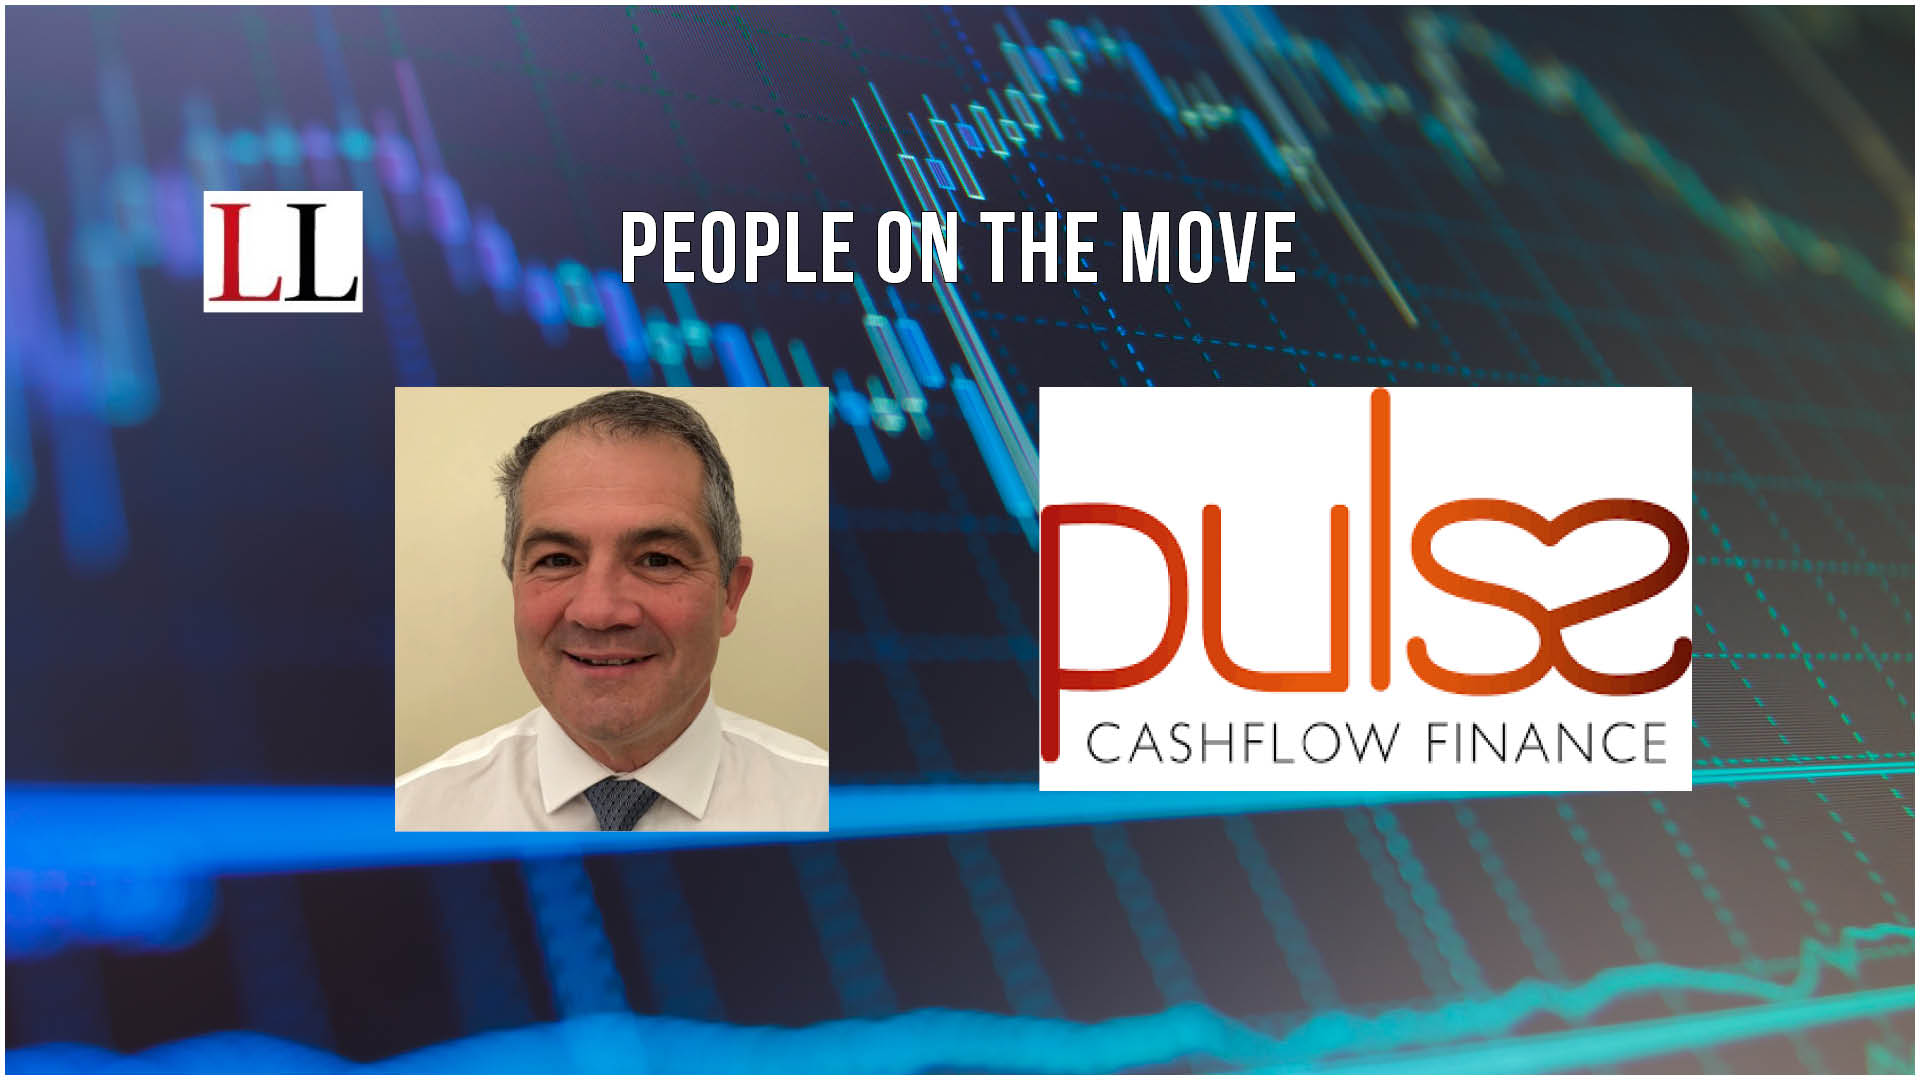 Nic Hanson announced as new regional director at Pulse Cashflow